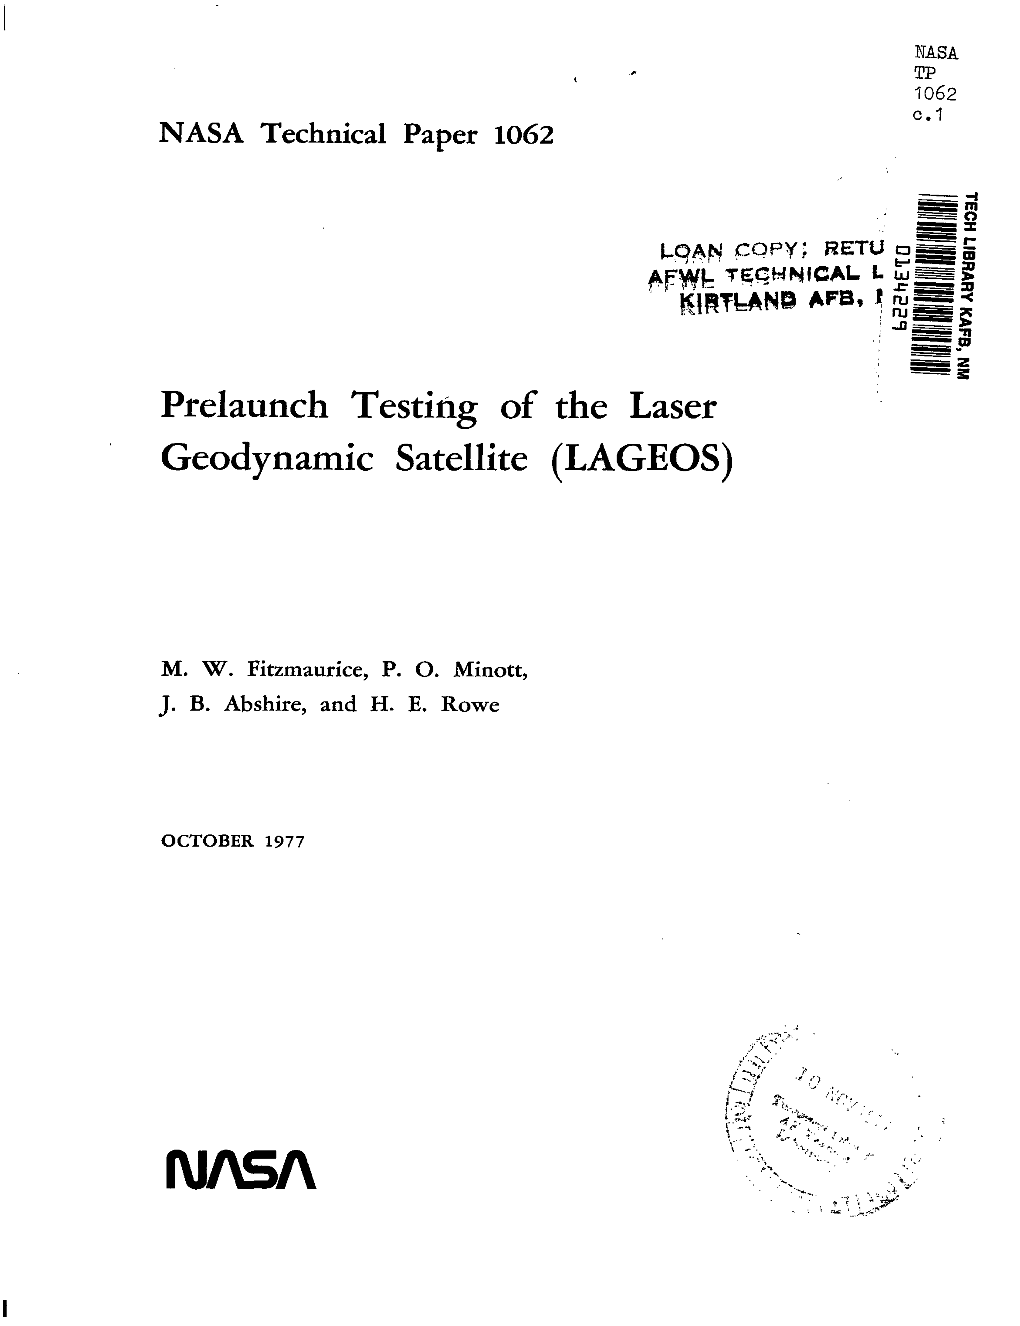 R Prelaunch Testing of the Laser Geodynamic Satellite (LAGEOS)